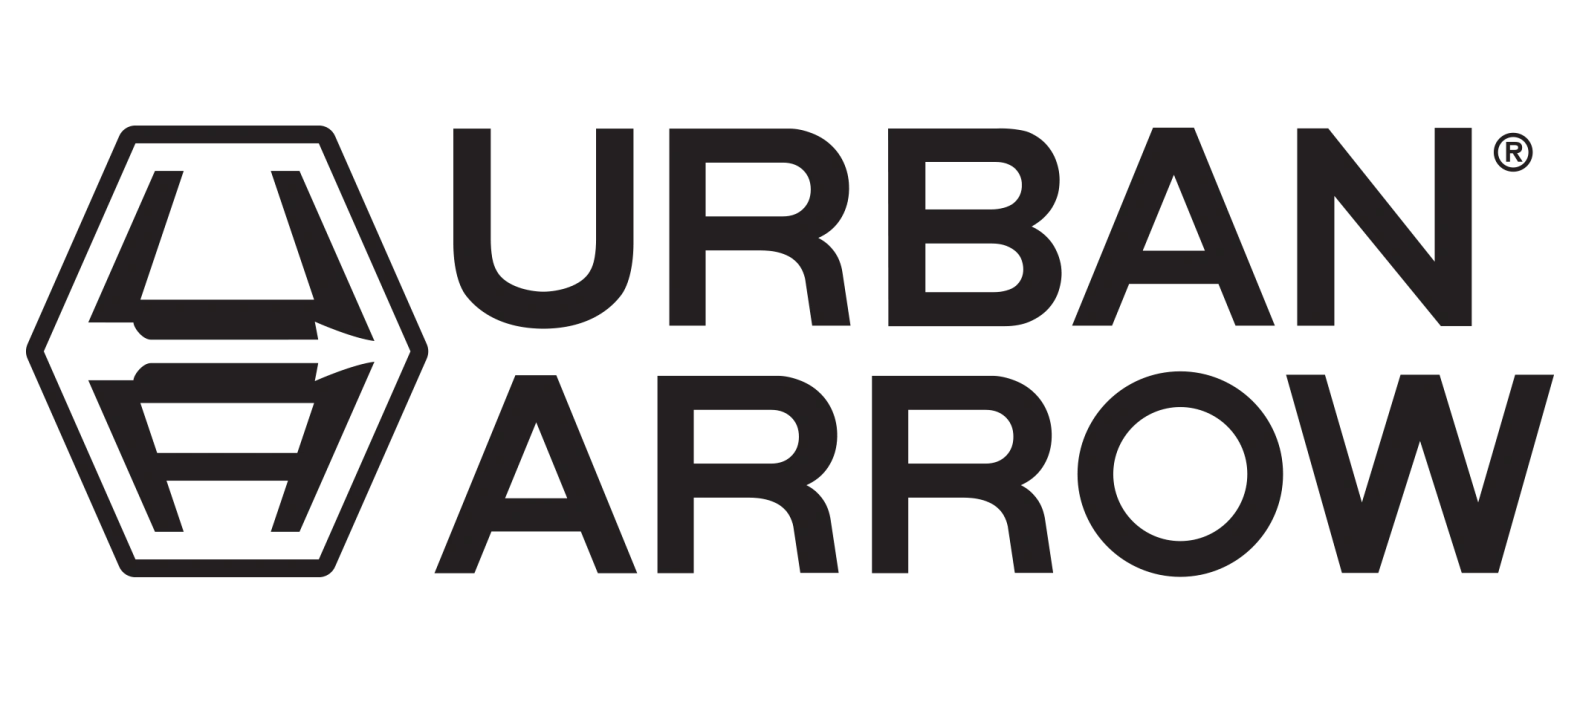 Urban_Arrow_Logo_A_black.png